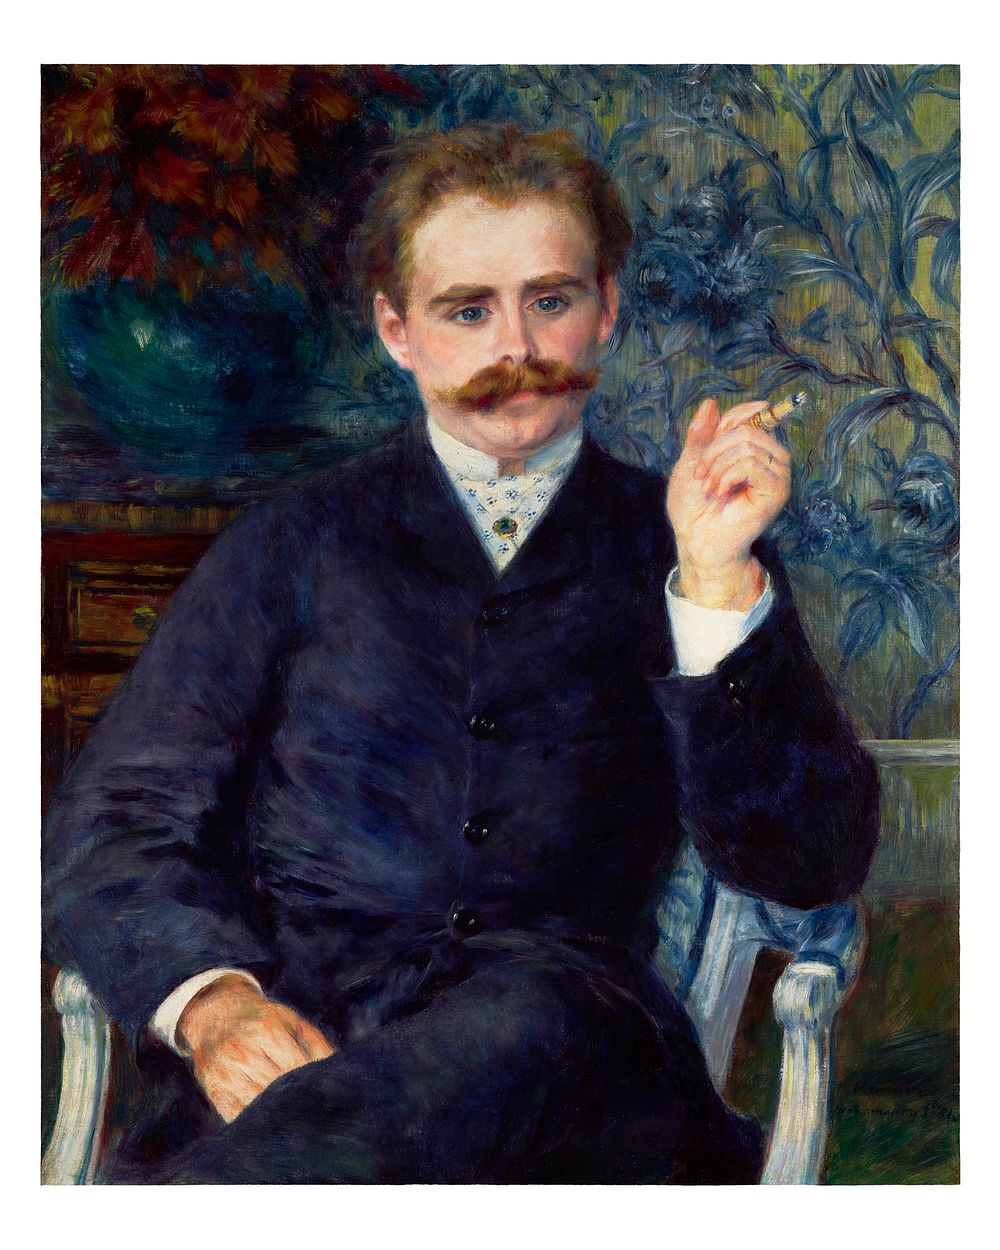 Pierre-Auguste Renoir poster, Albert Cahen painting (1881). Original from The Getty. Digitally enhanced by rawpixel.